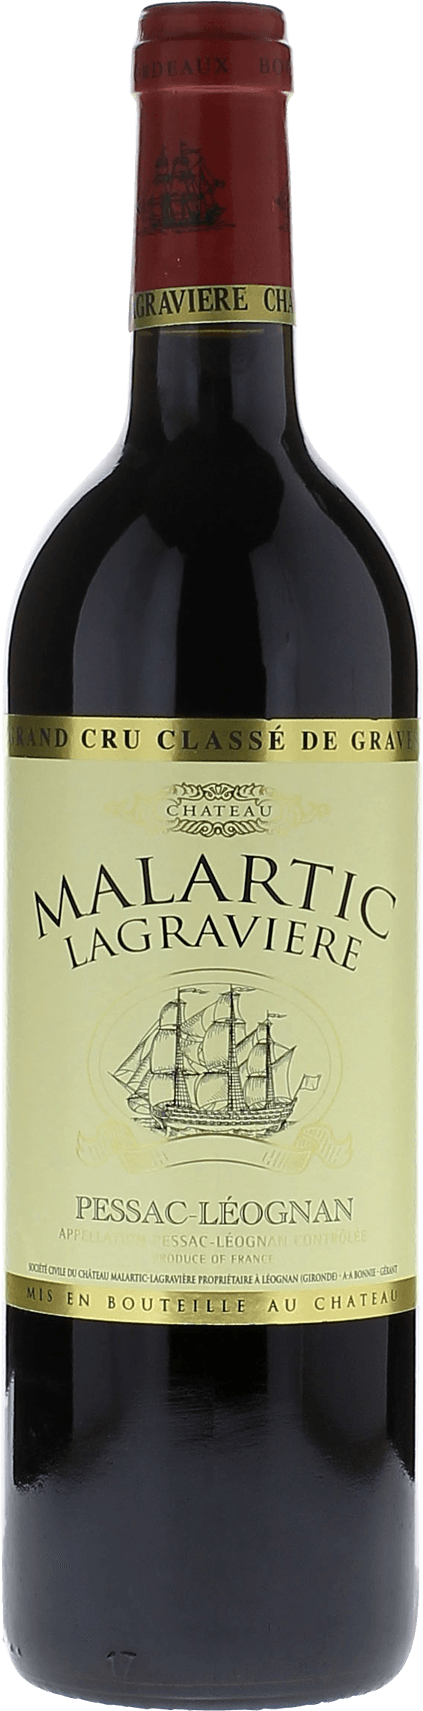 Malartic lagraviere rouge 2005 Grand Cru Class Graves, Bordeaux rouge